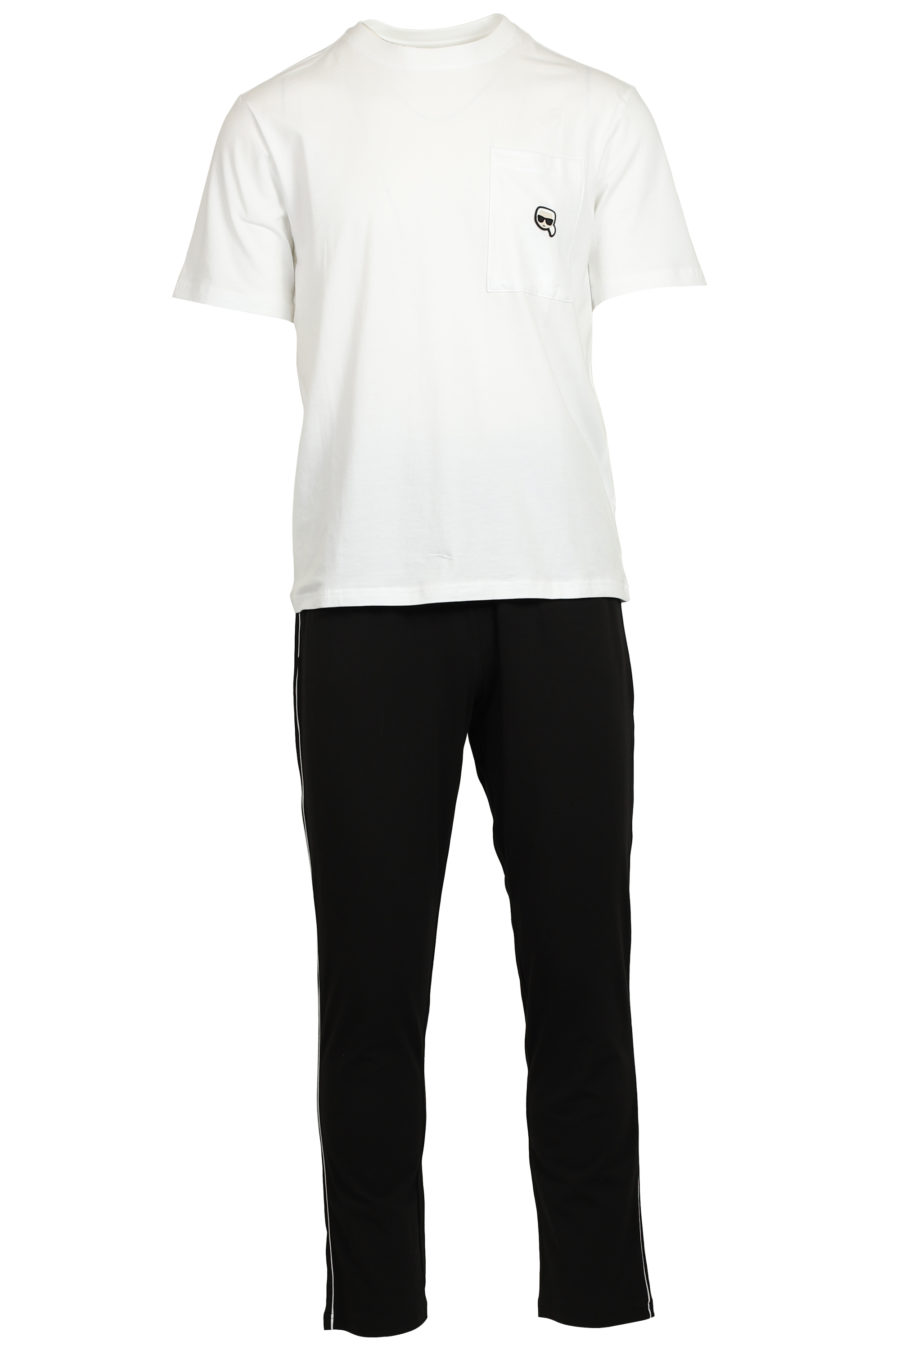 Black and white pyjama set with rubber logo - IMG 3737